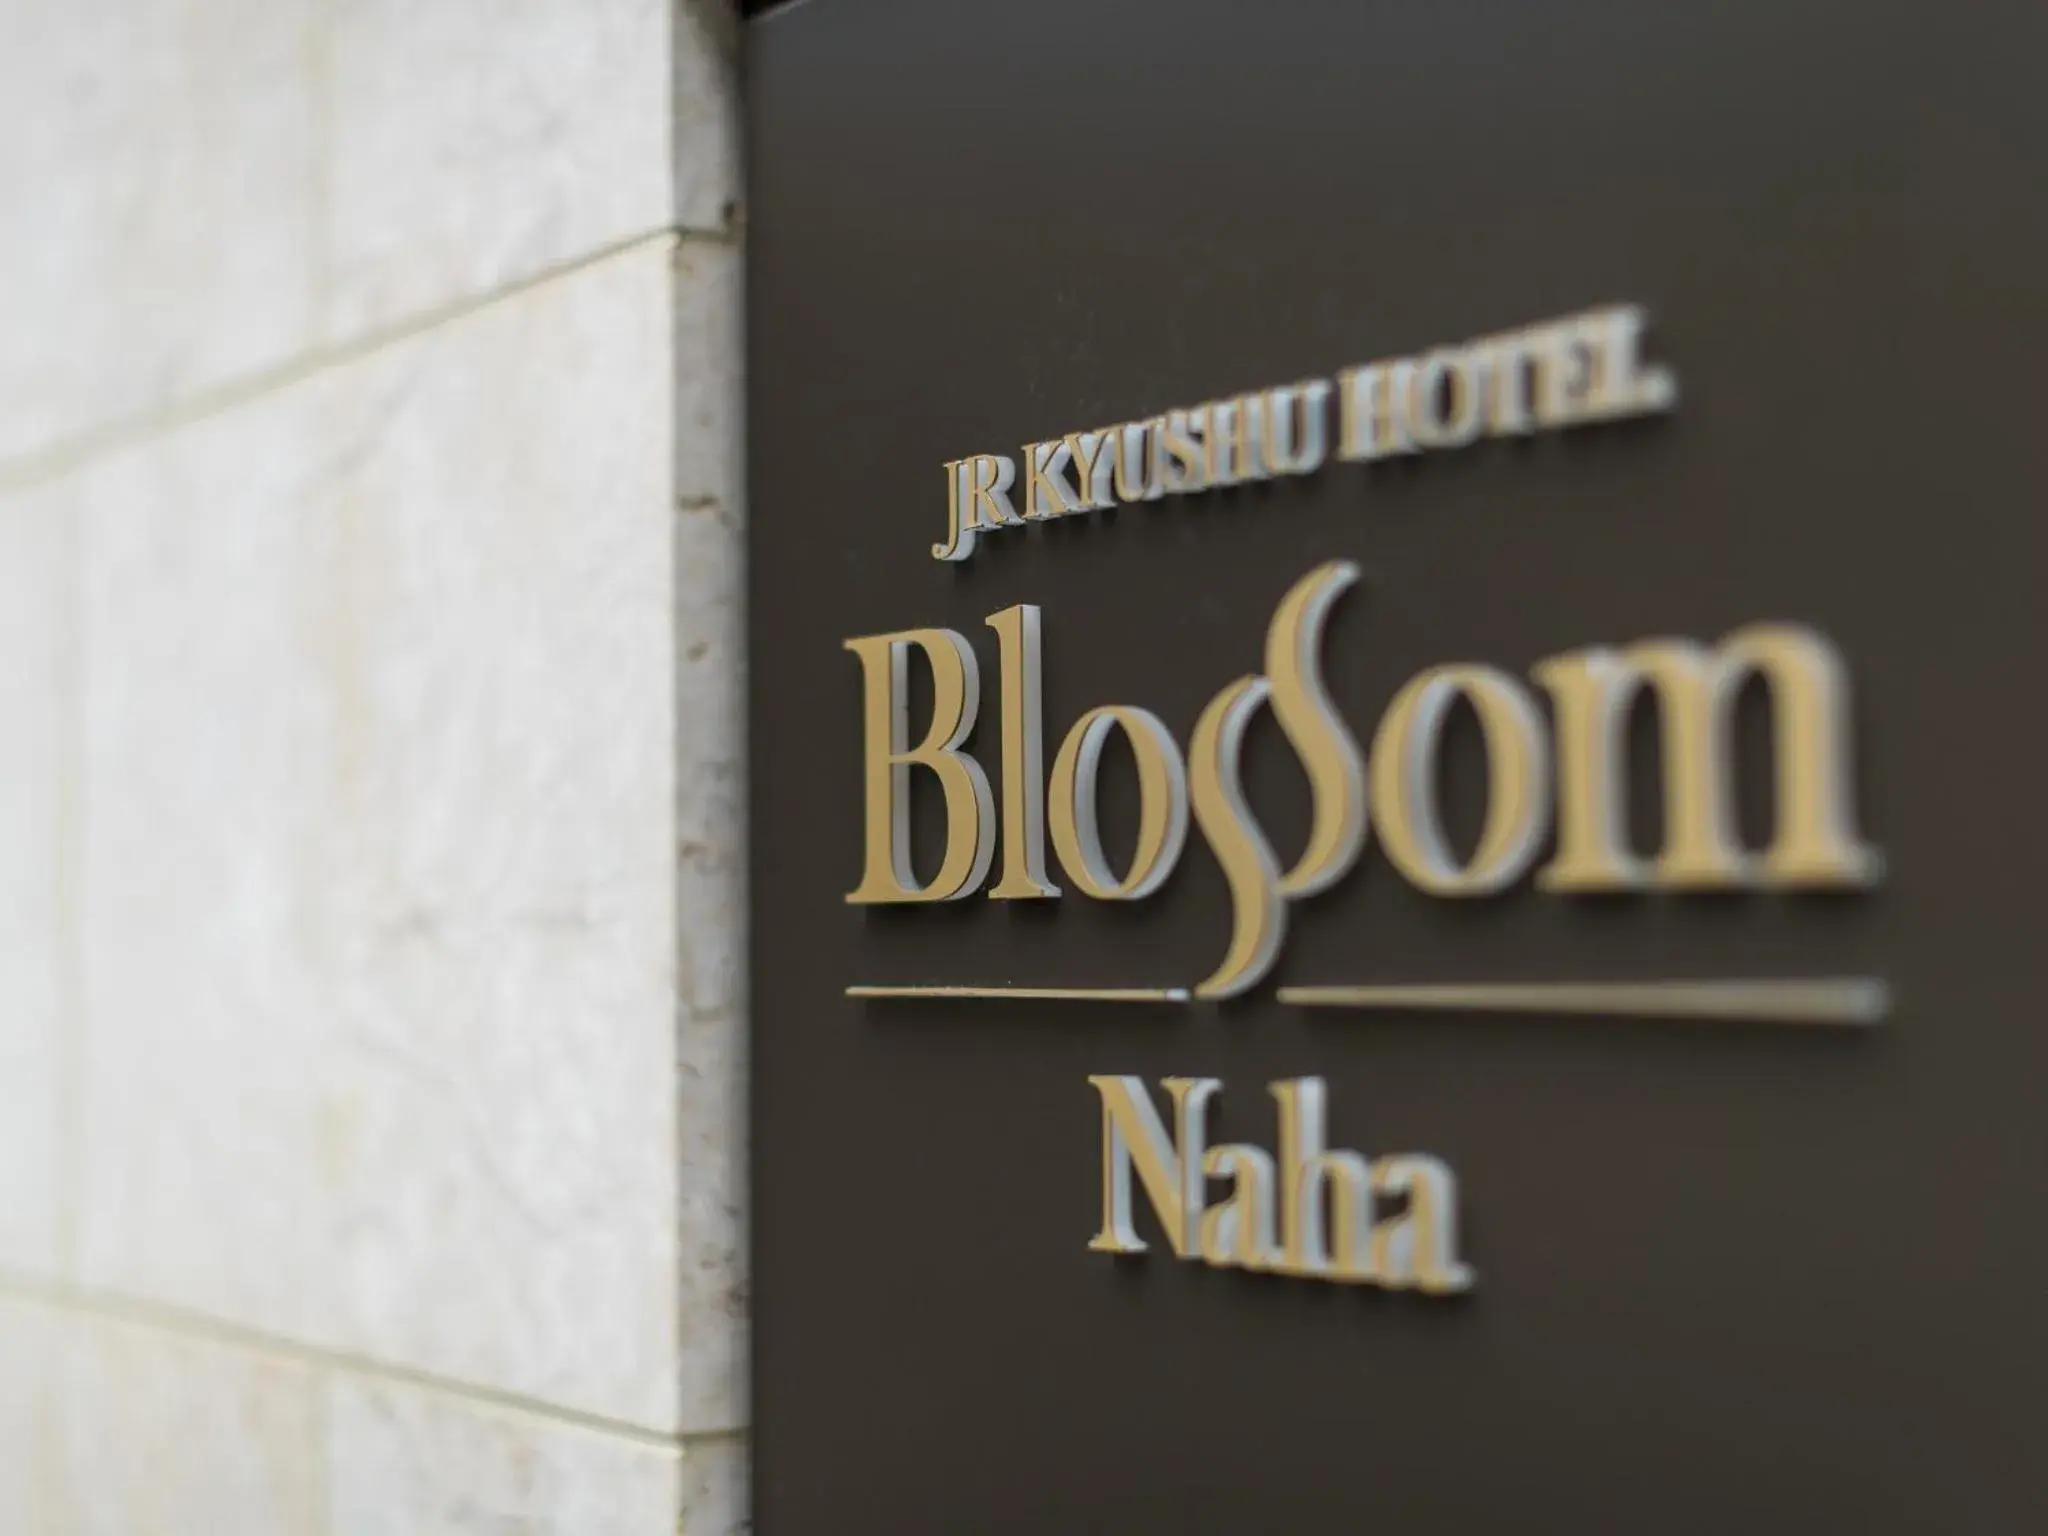 Property logo or sign in JR Kyushu Hotel Blossom Naha